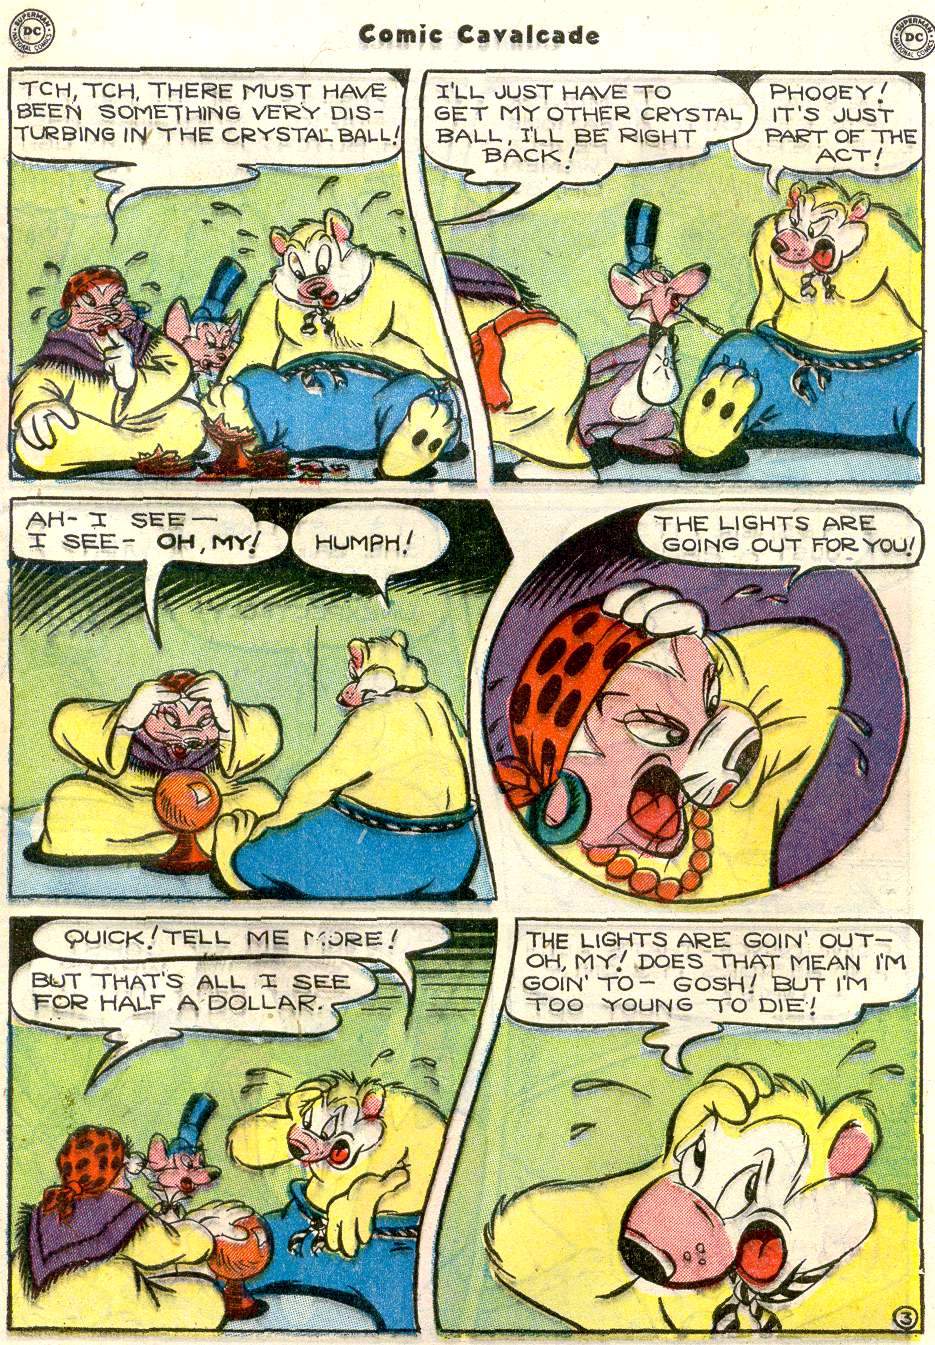 Comic Cavalcade issue 43 - Page 61